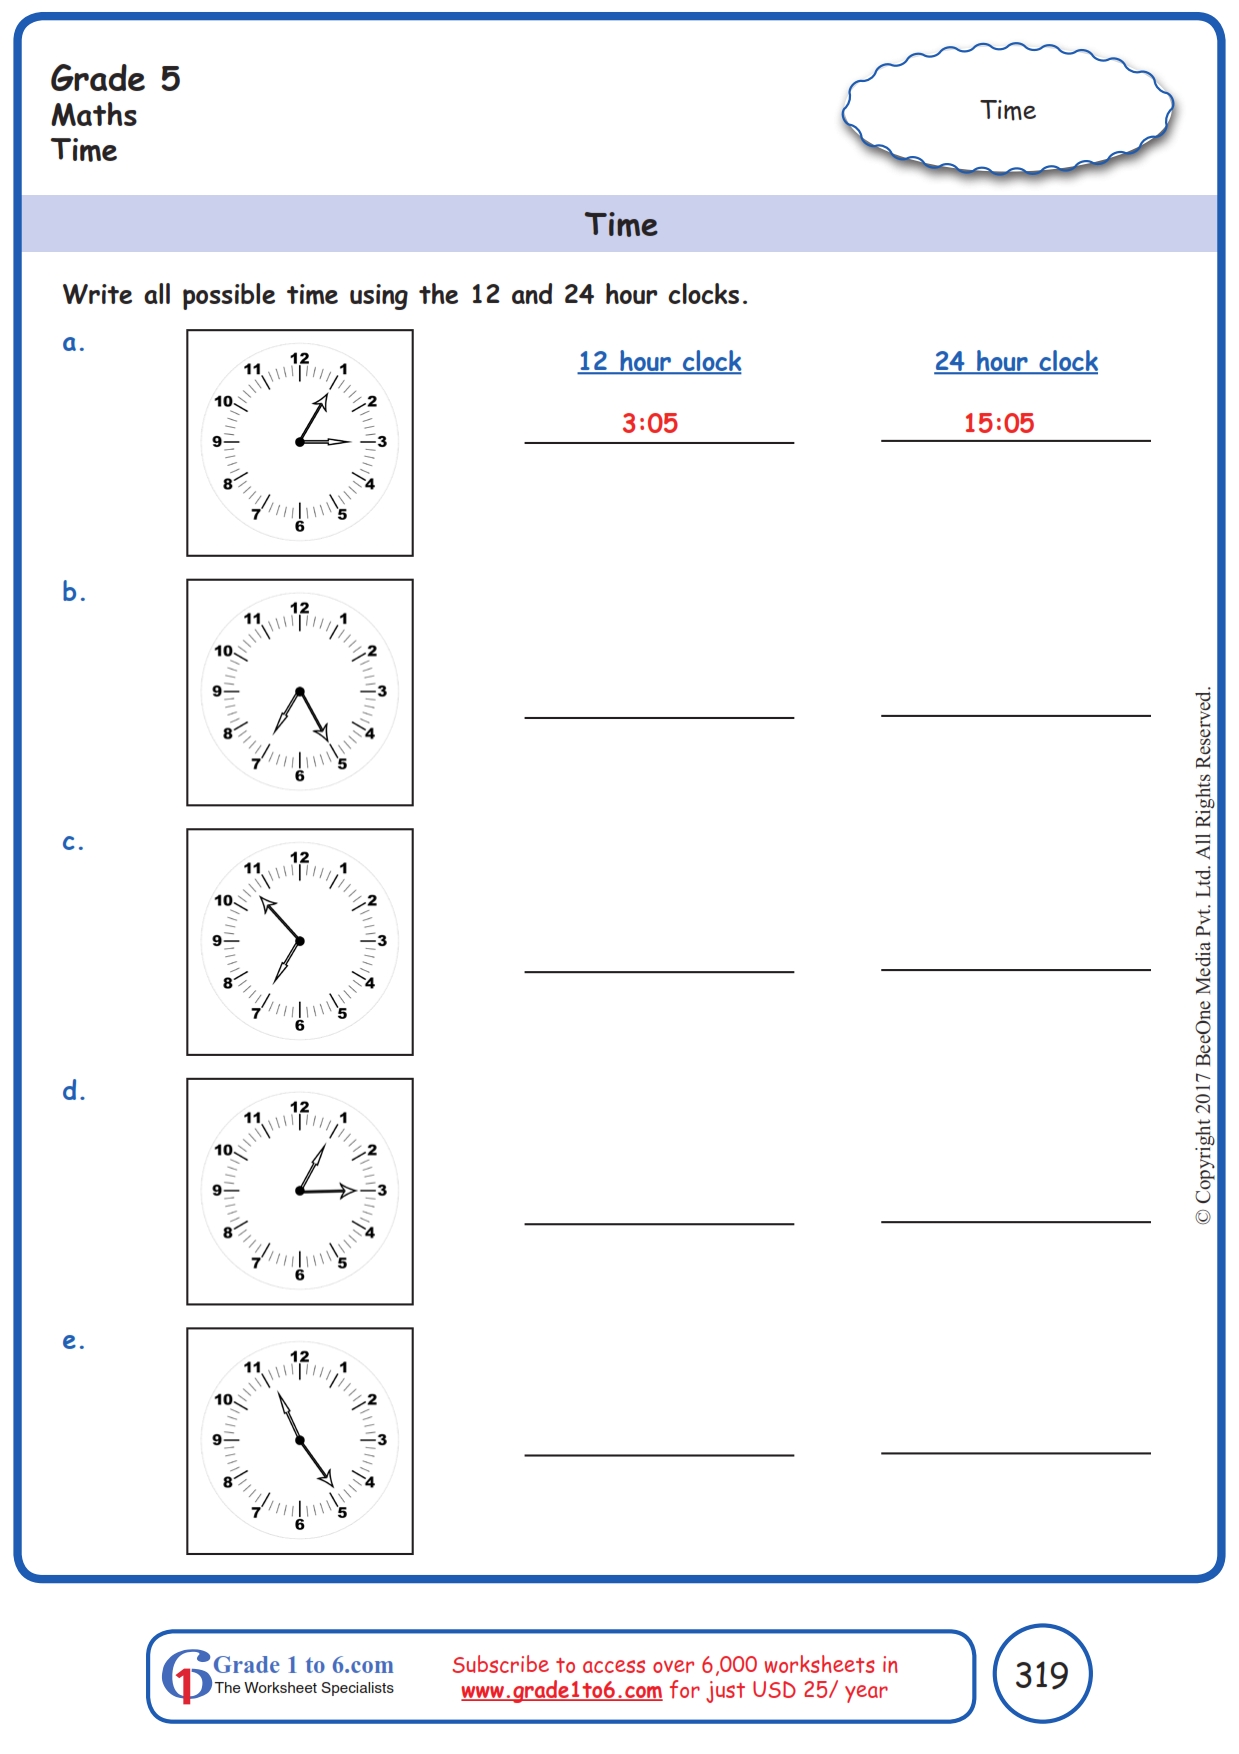 class-4-cbse-maths-worksheets-pdf-download-worksheet-maths-worksheets-for-grade-cbse-practice